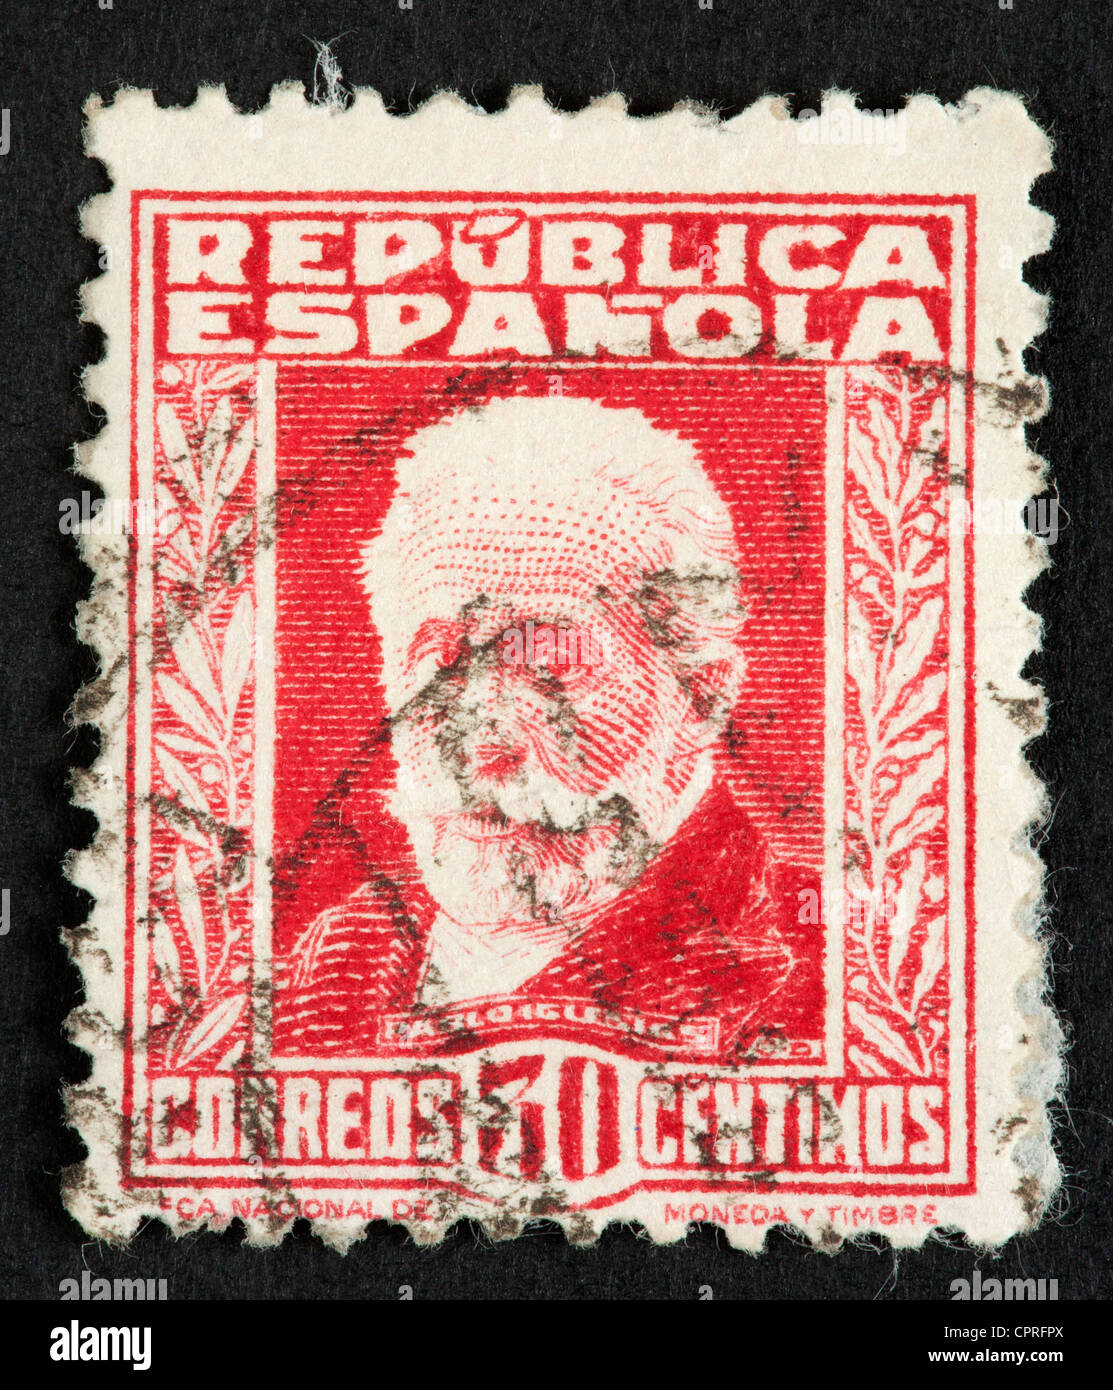 Republica Española postage stamp Stock Photo